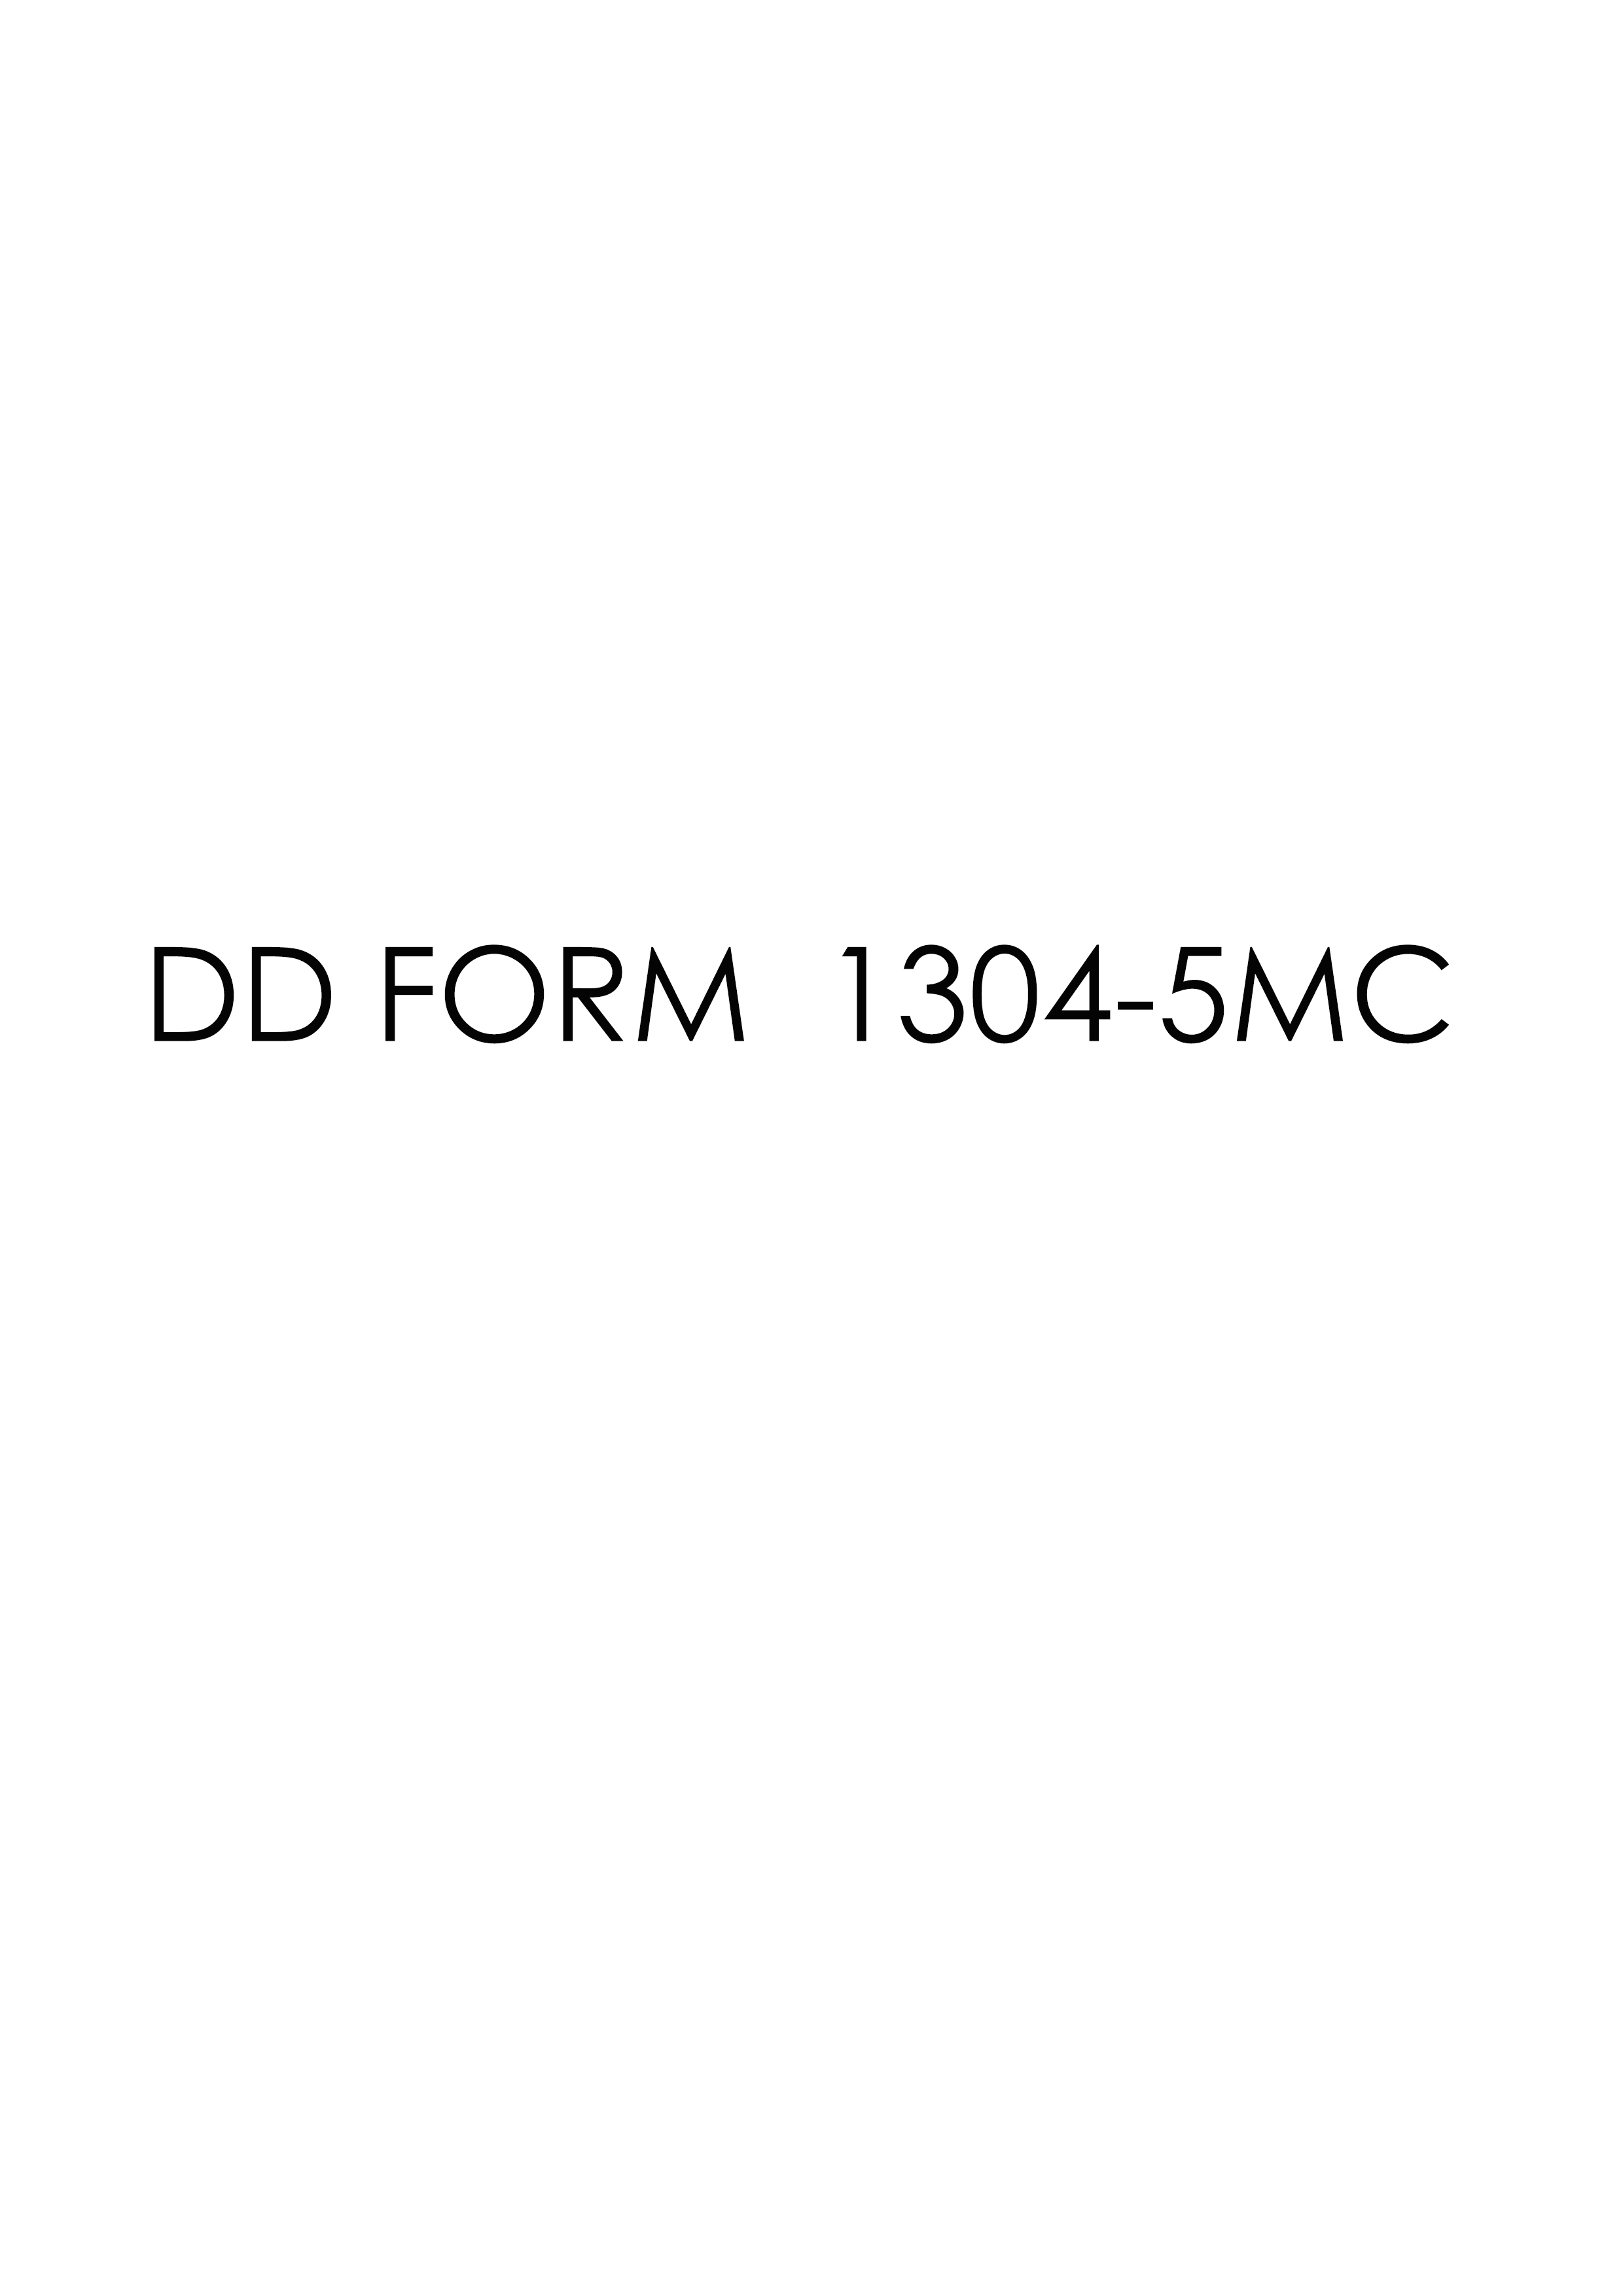 Download dd Form 1304-5MC